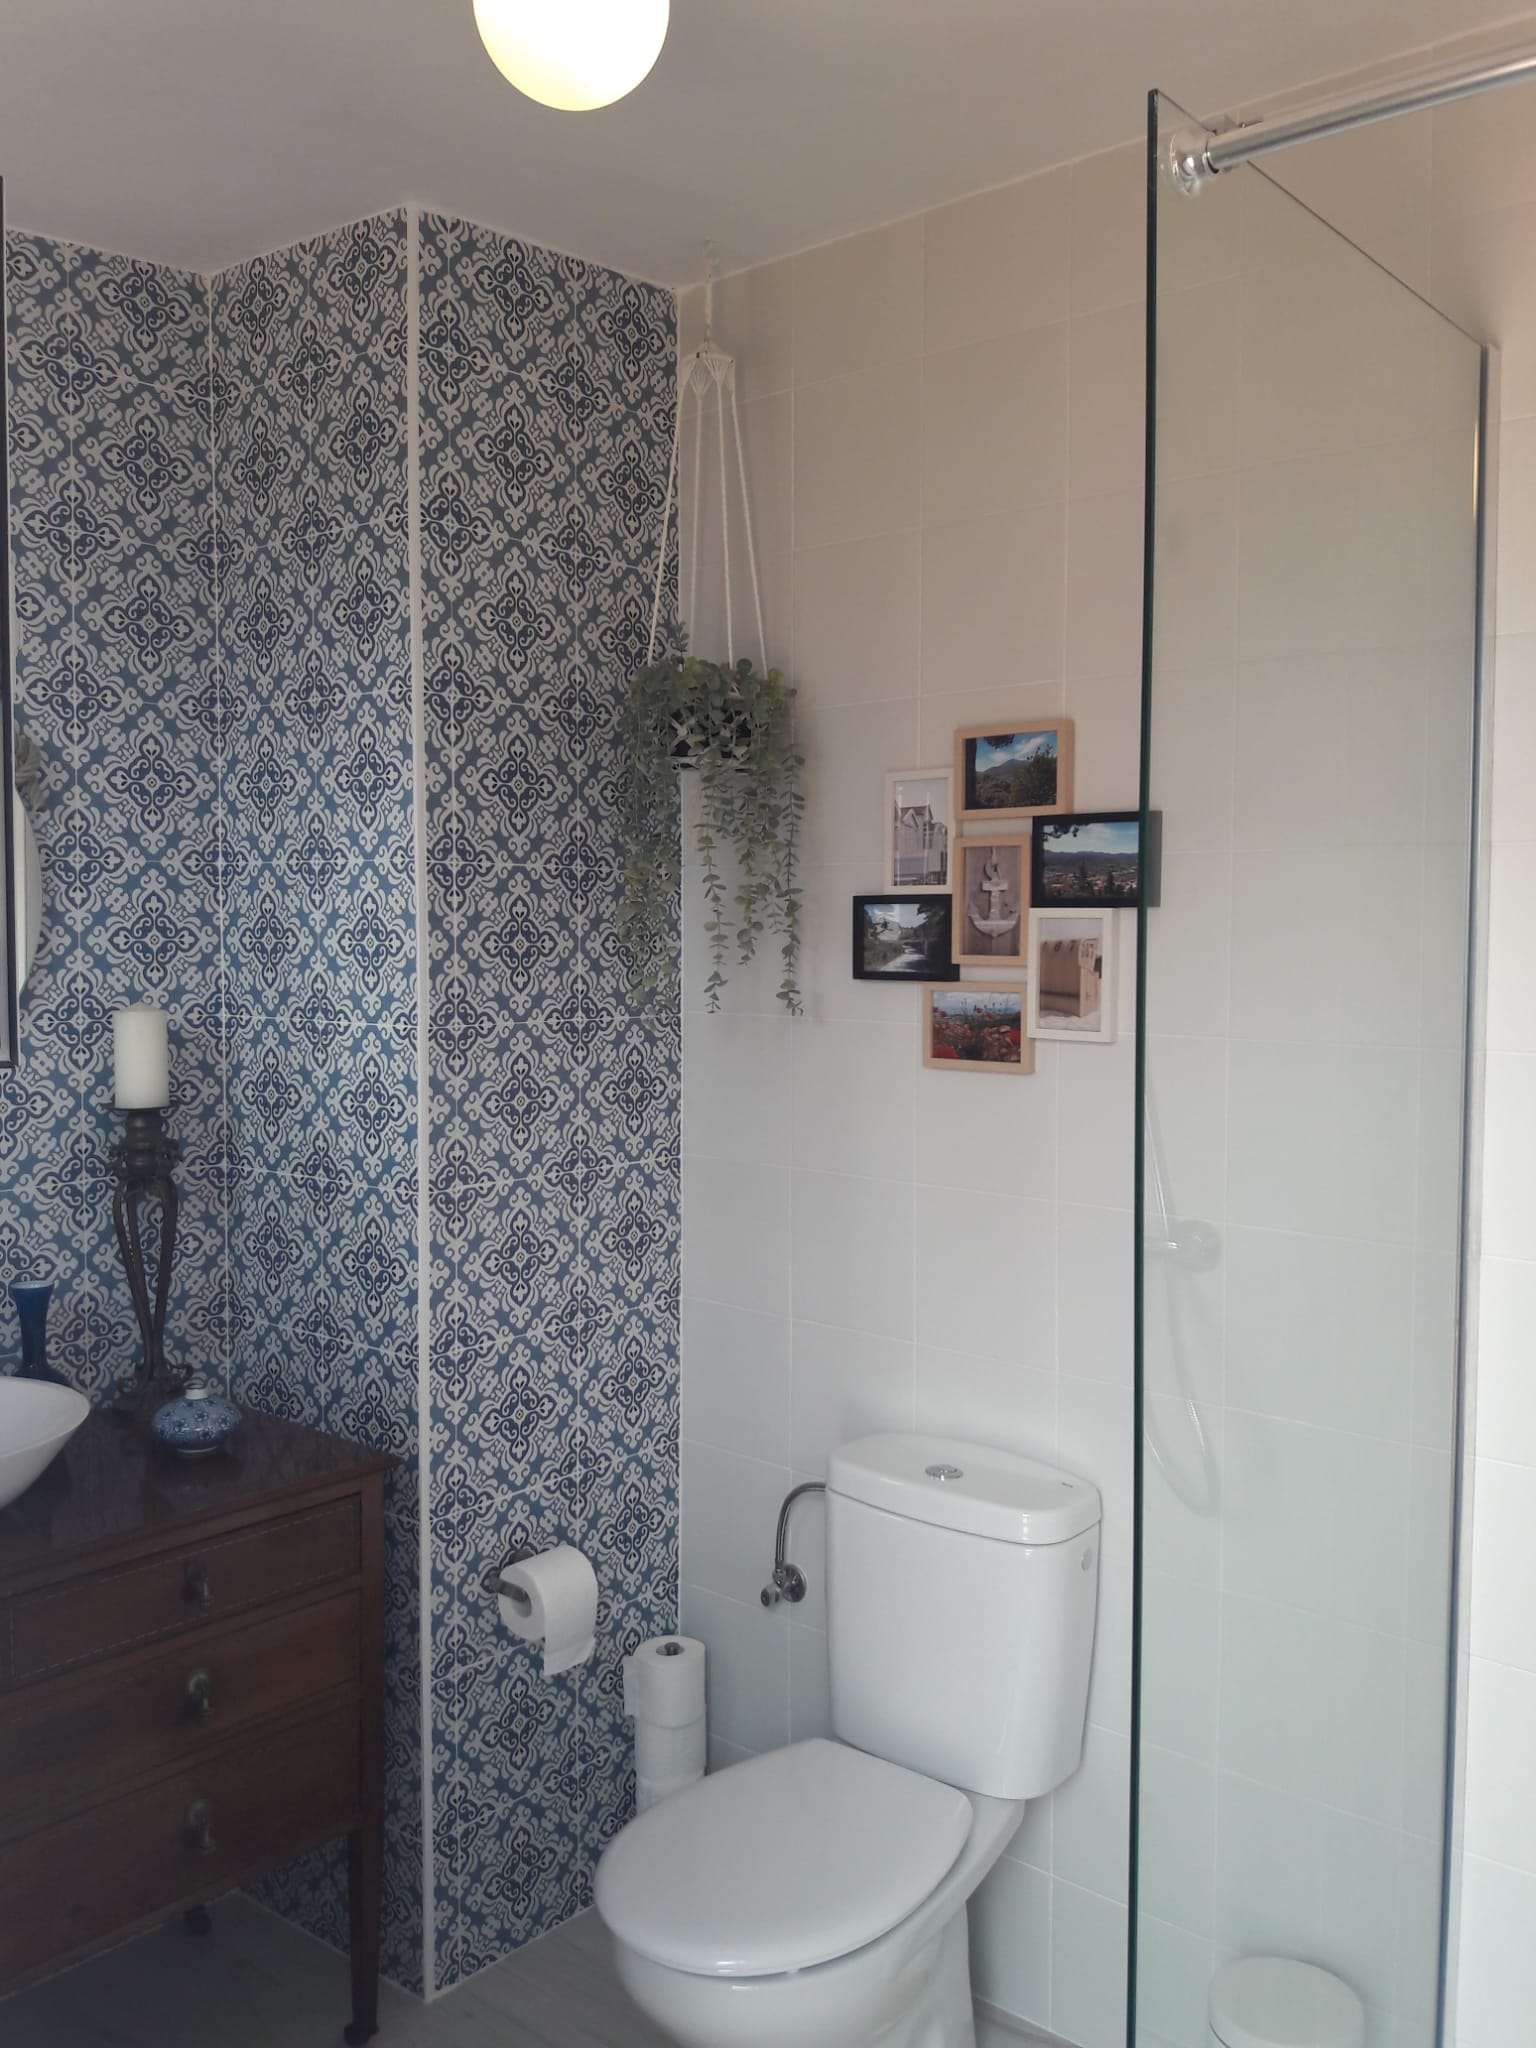 Shower room with blue patterned tiles